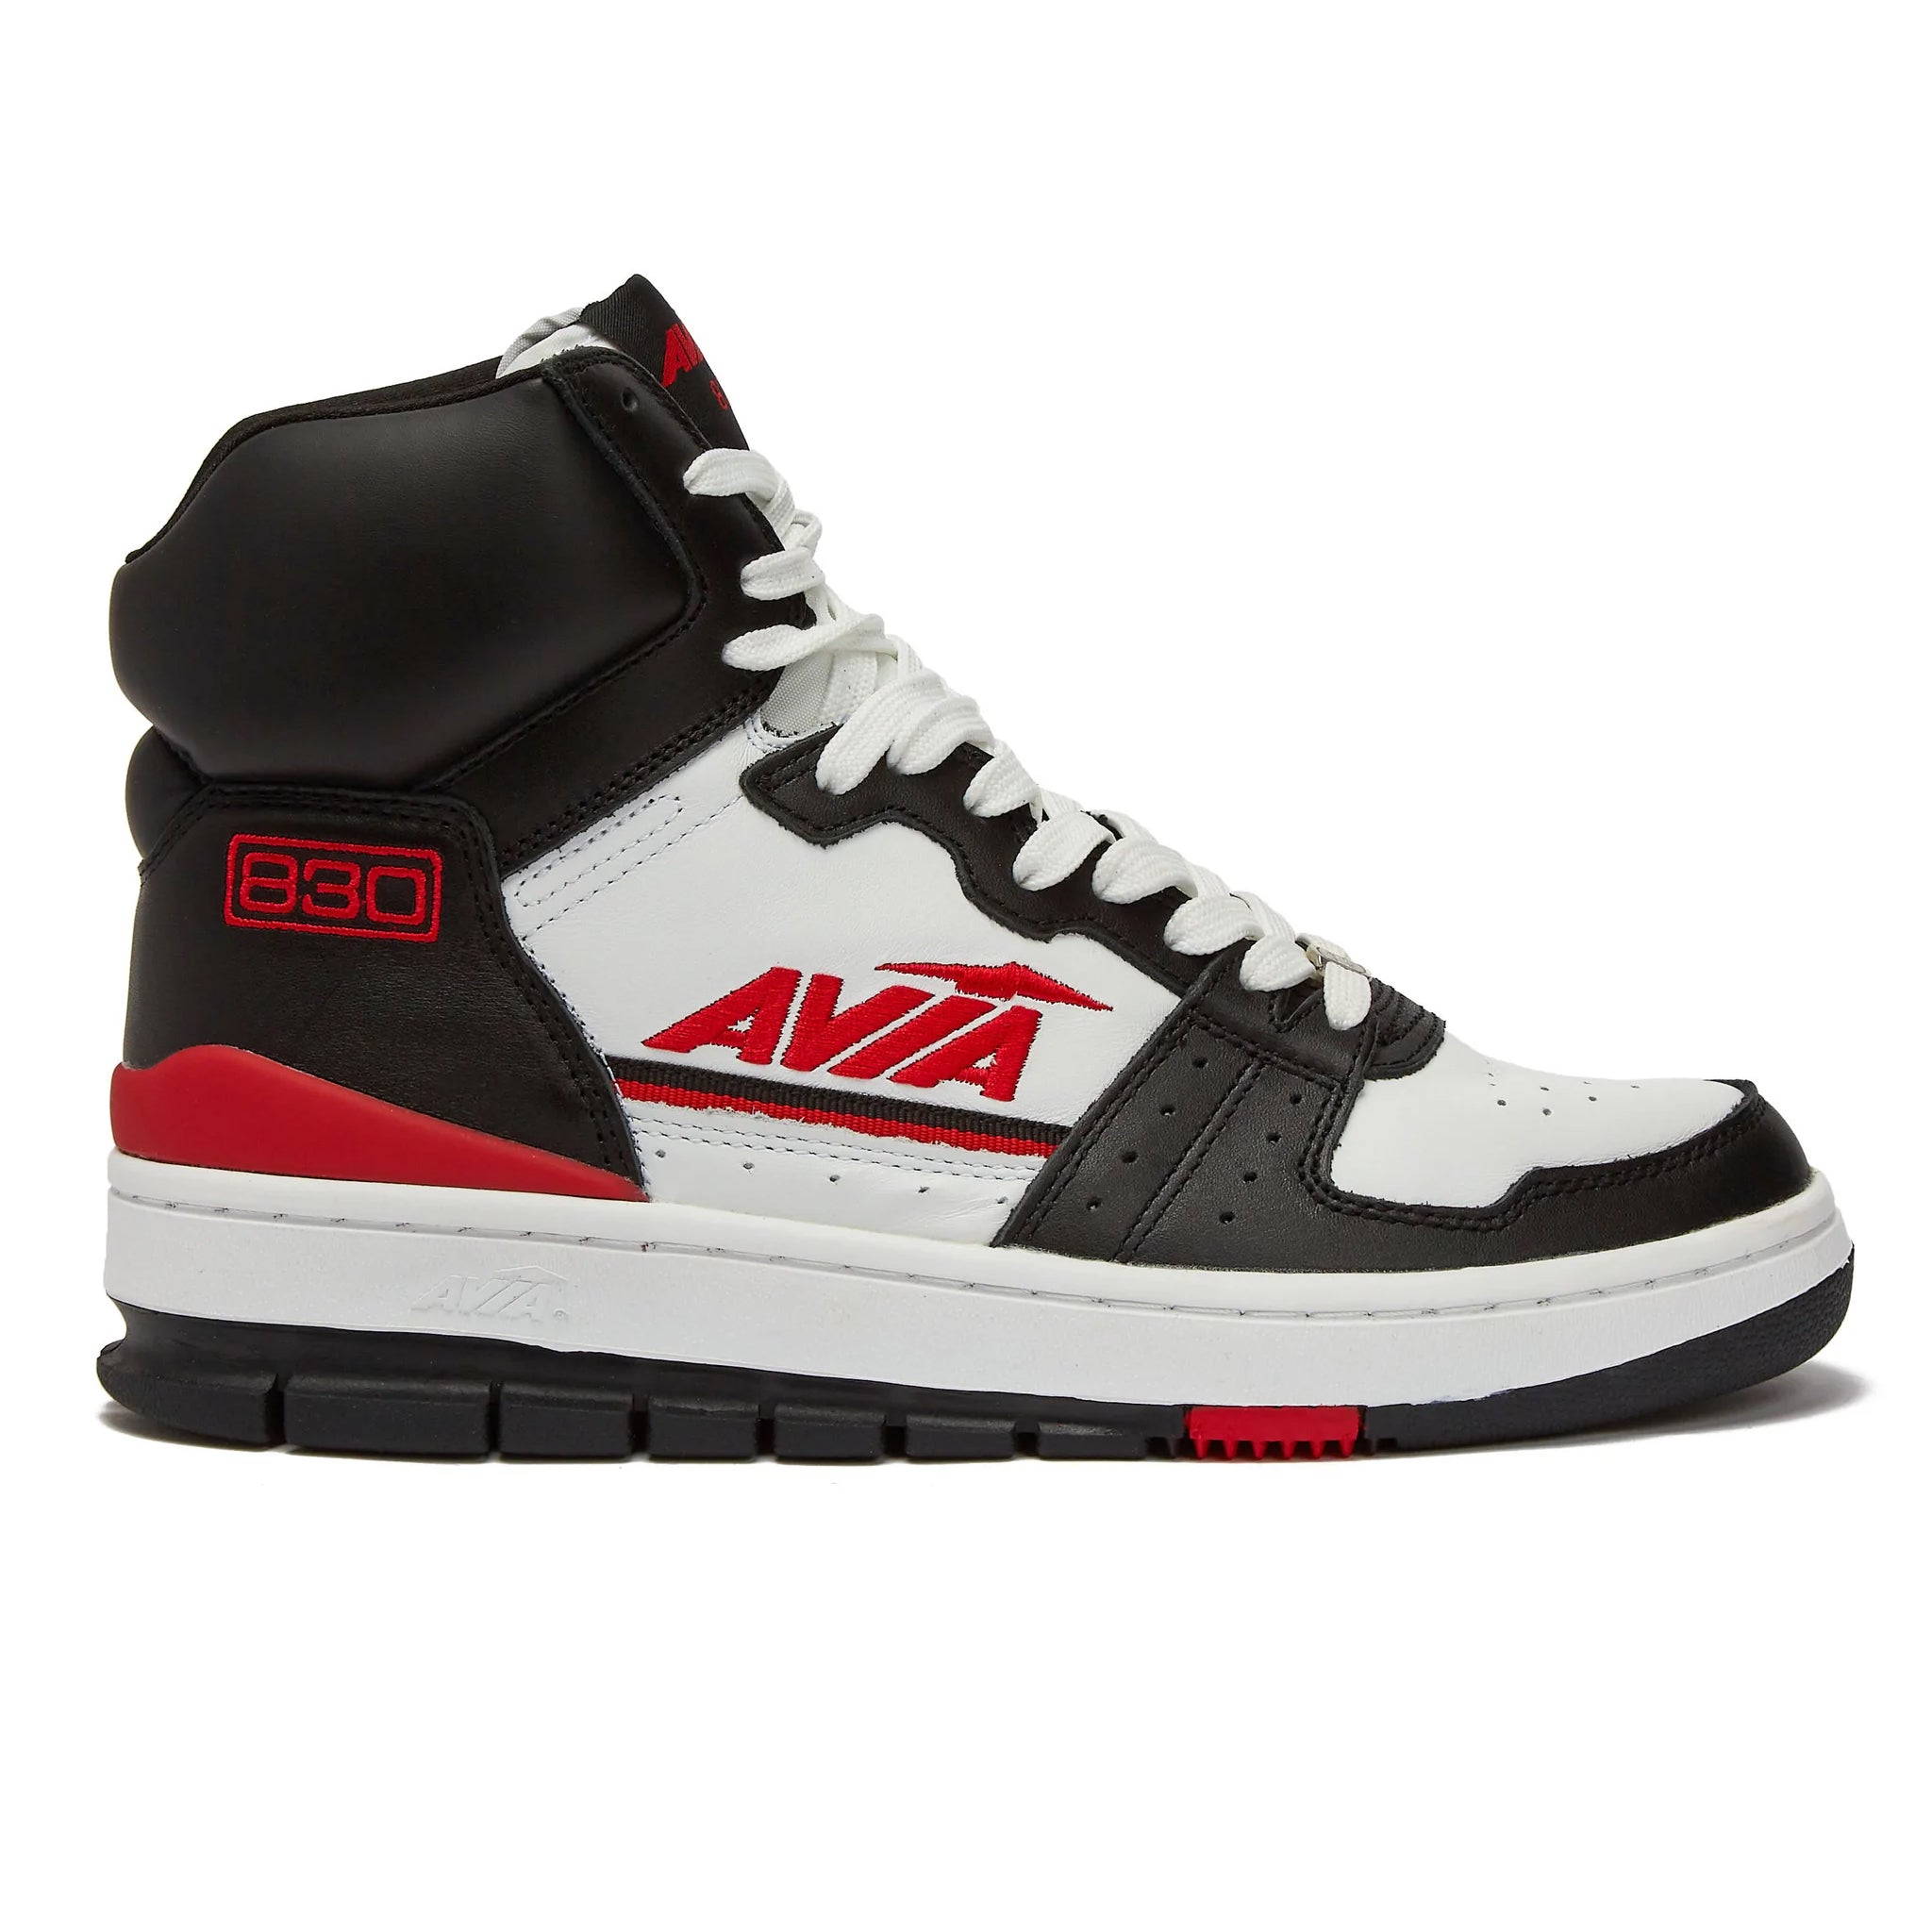 Avia Shoes in Avia 